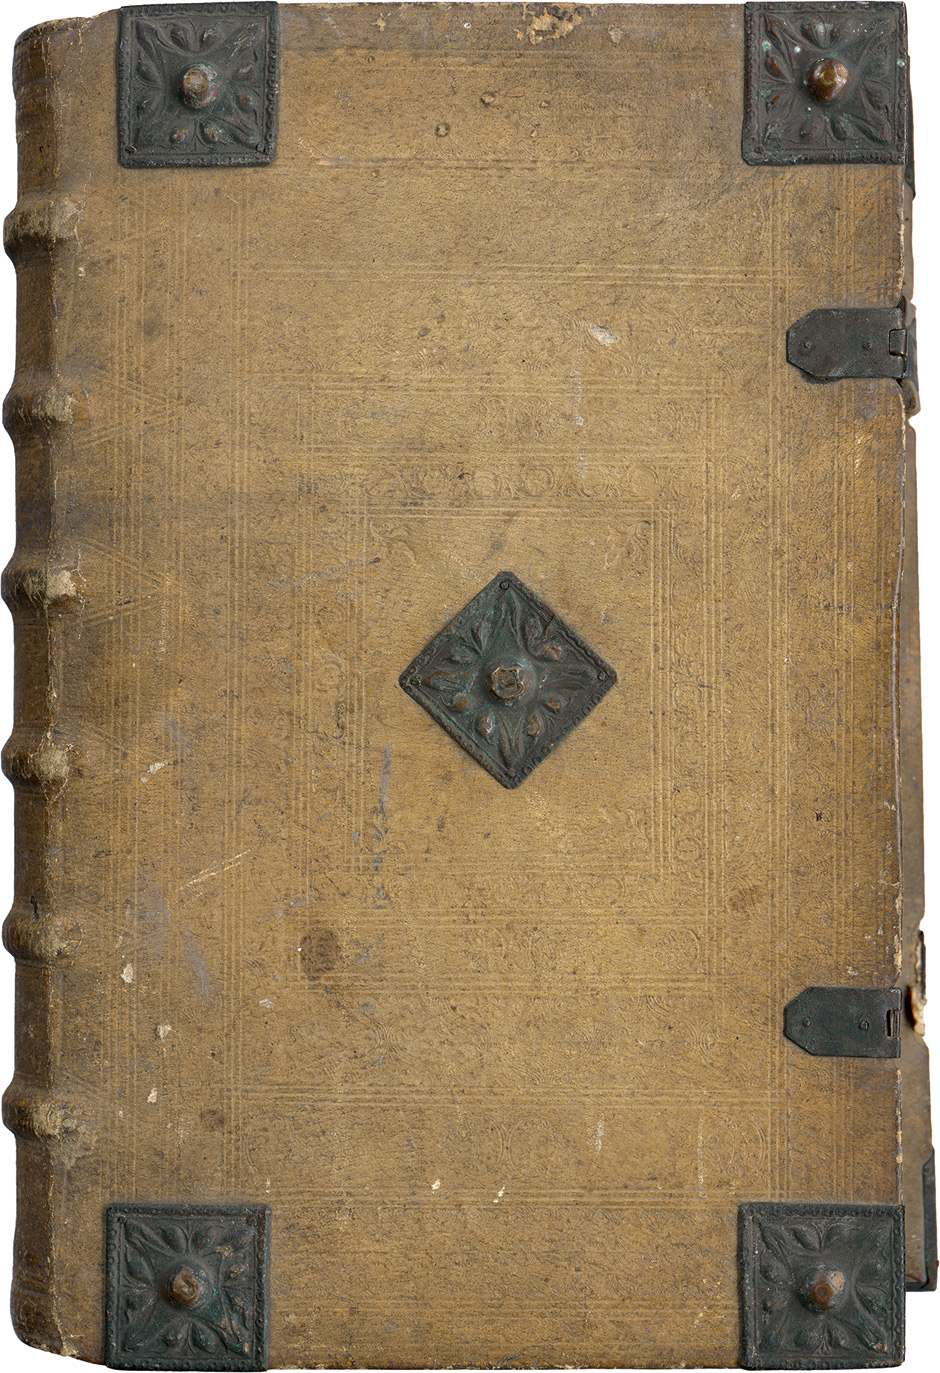 Lot 1229, Auction  115, Biblia germanica, Biblia